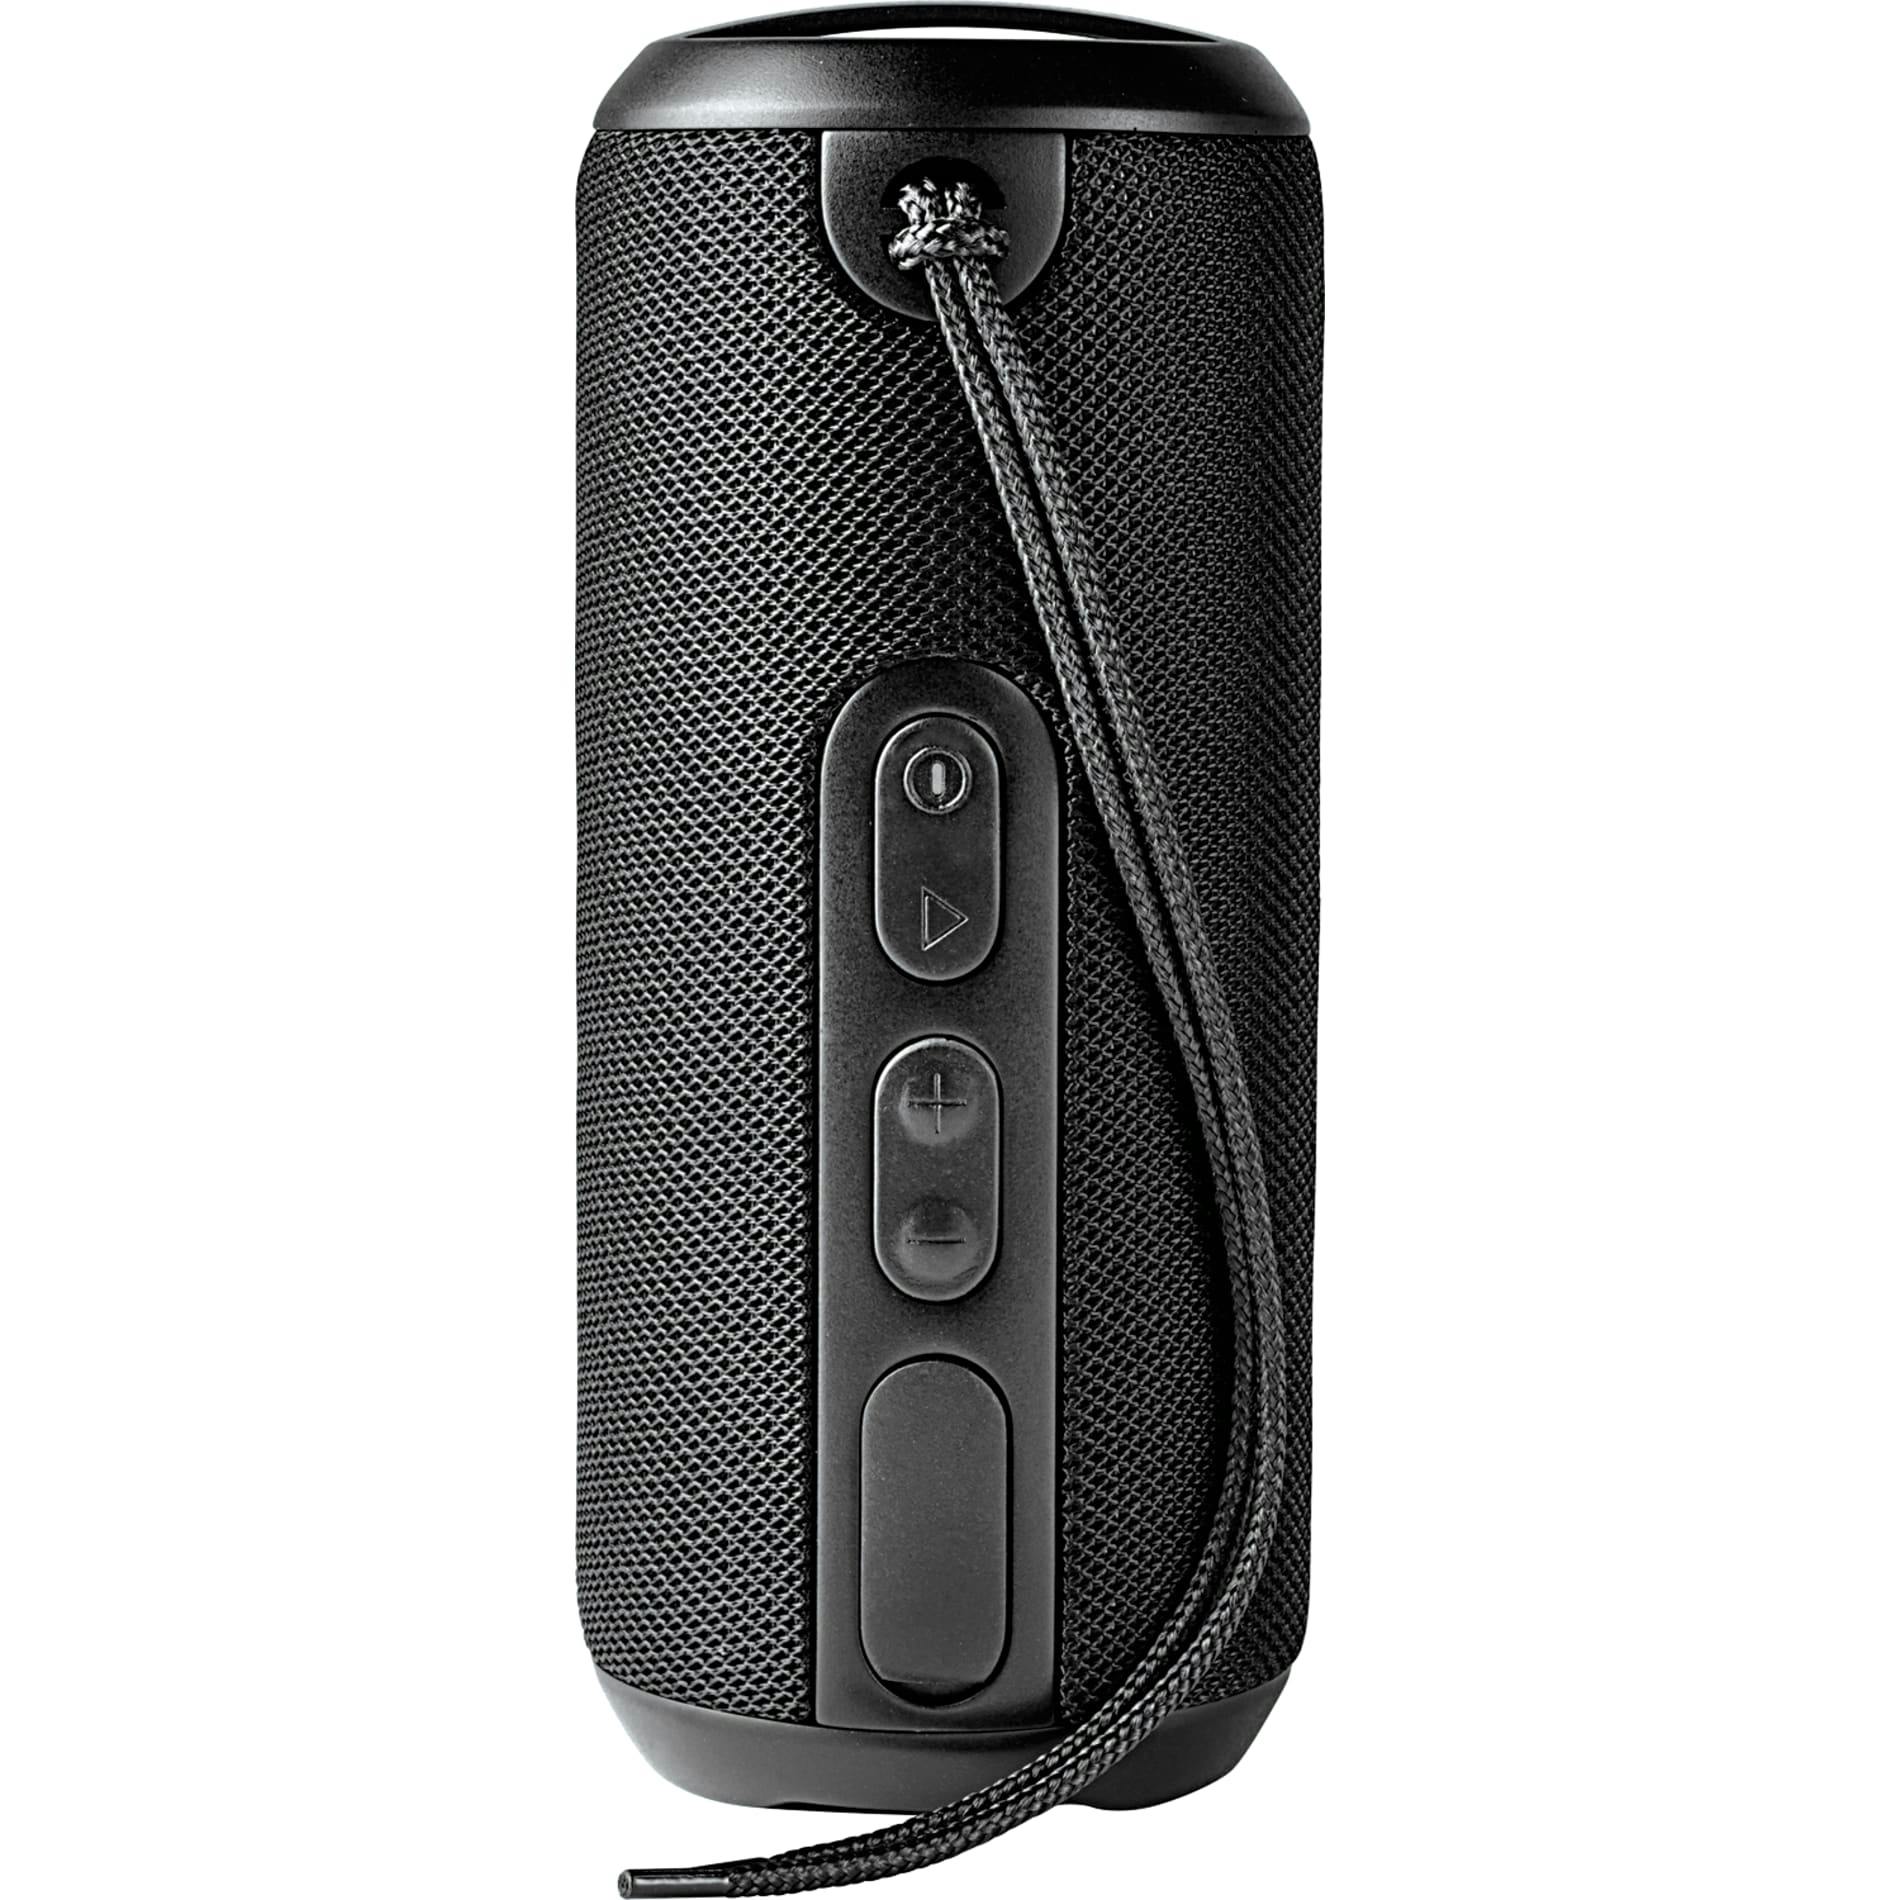 Rugged Fabric Outdoor Waterproof Bluetooth Speaker - additional Image 1